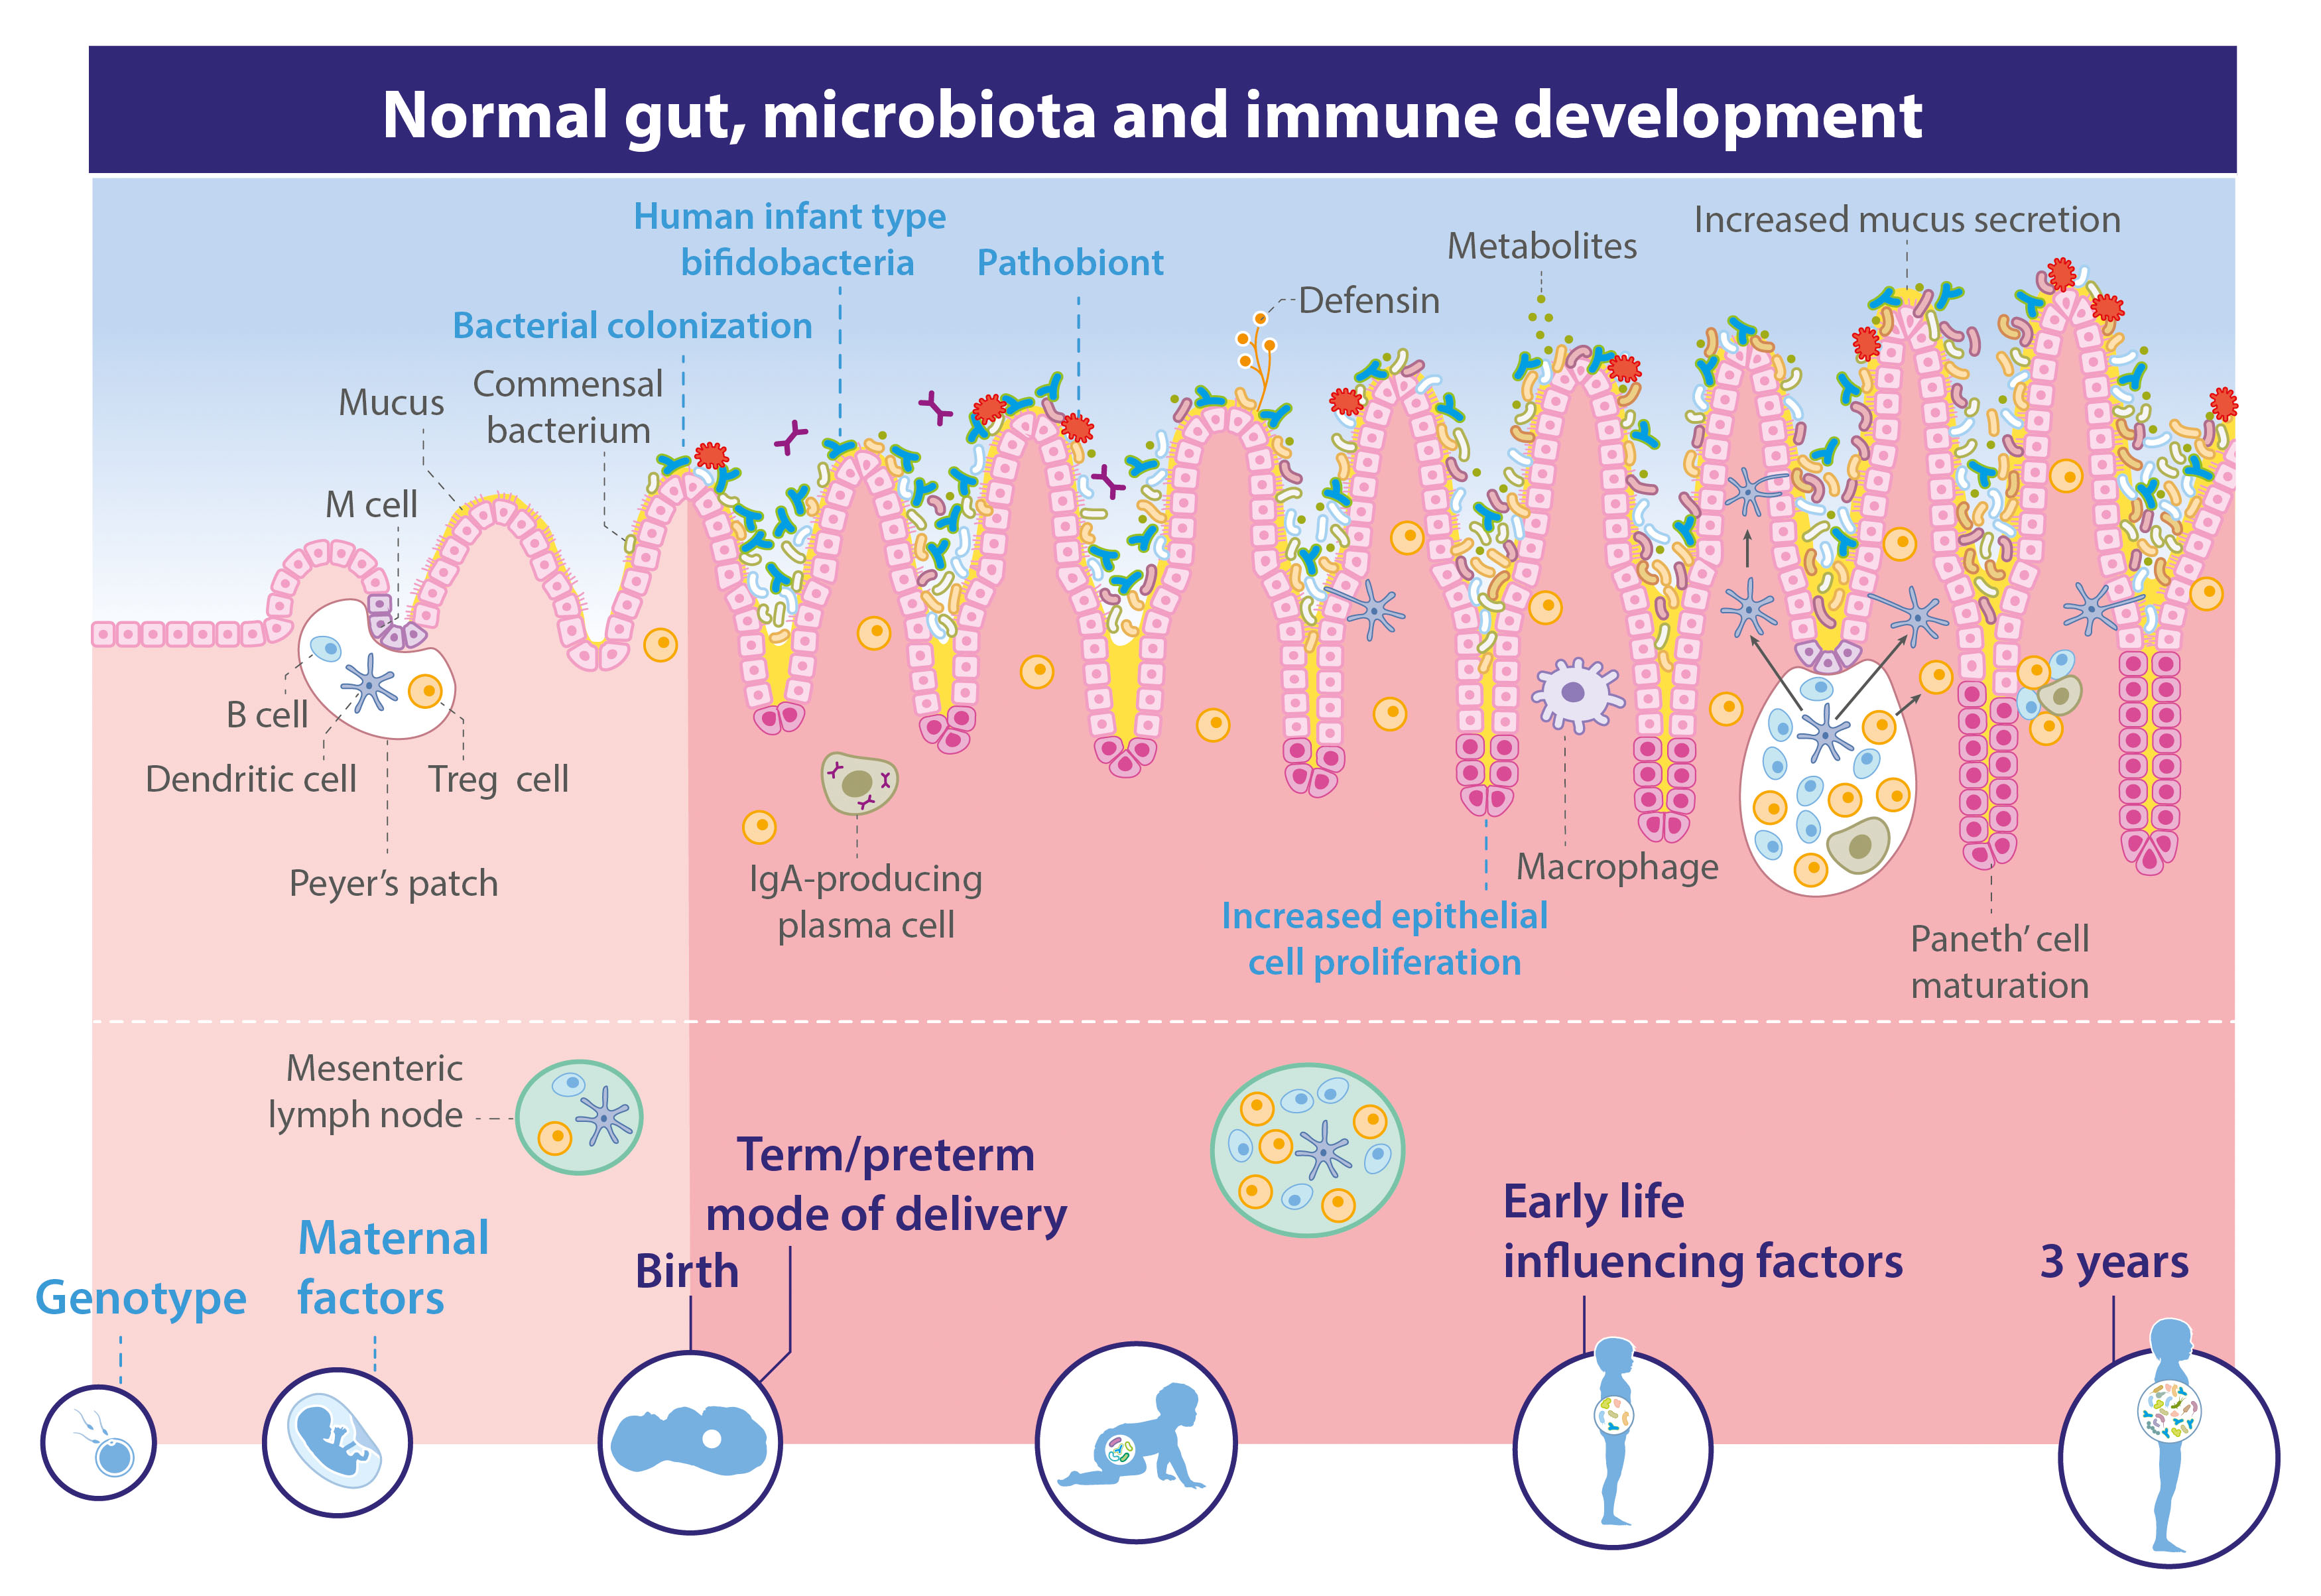 Immune-boosting gut flora